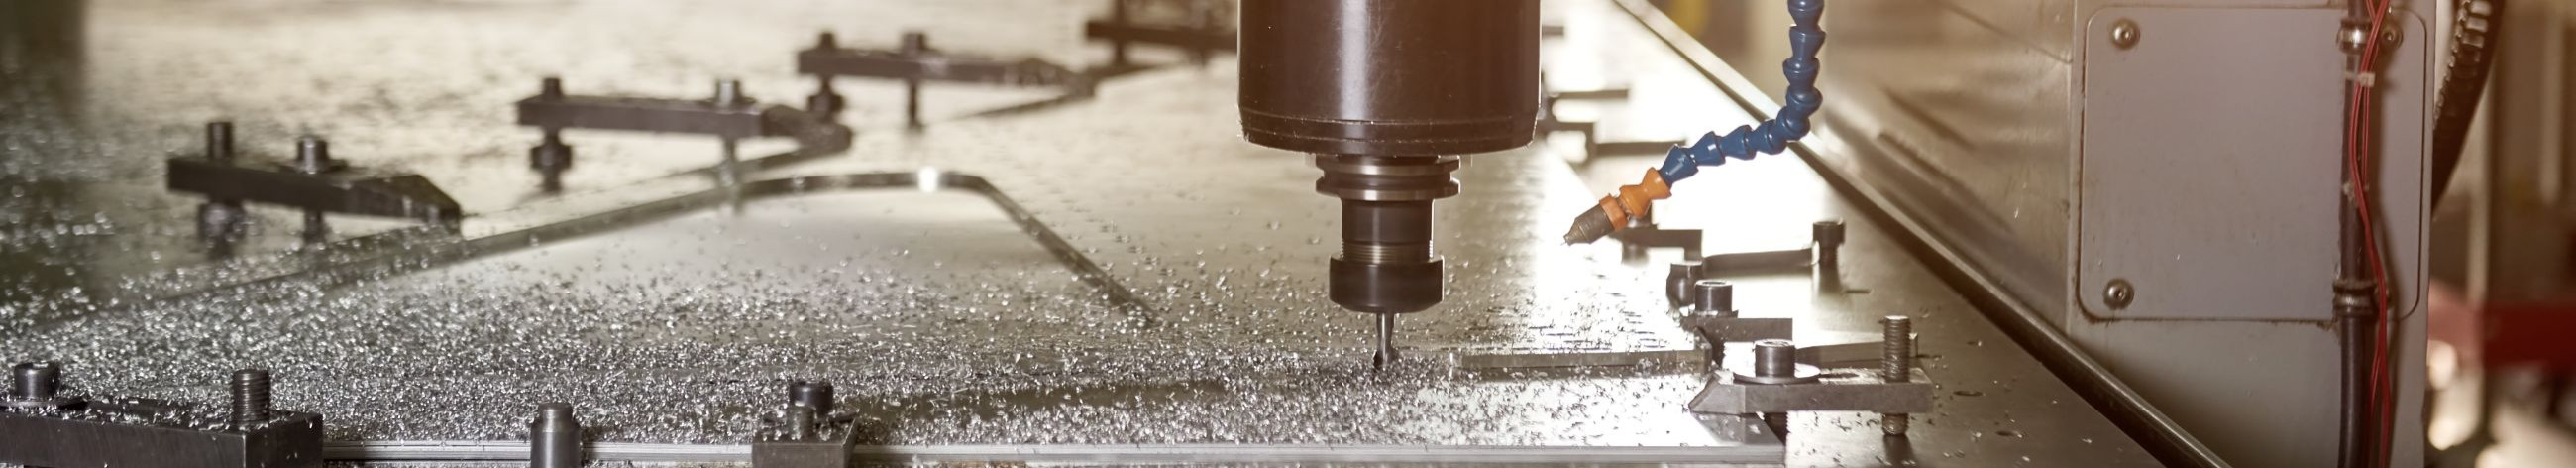 CNC milling, lasercut, thermoforming from plastic, aluminium